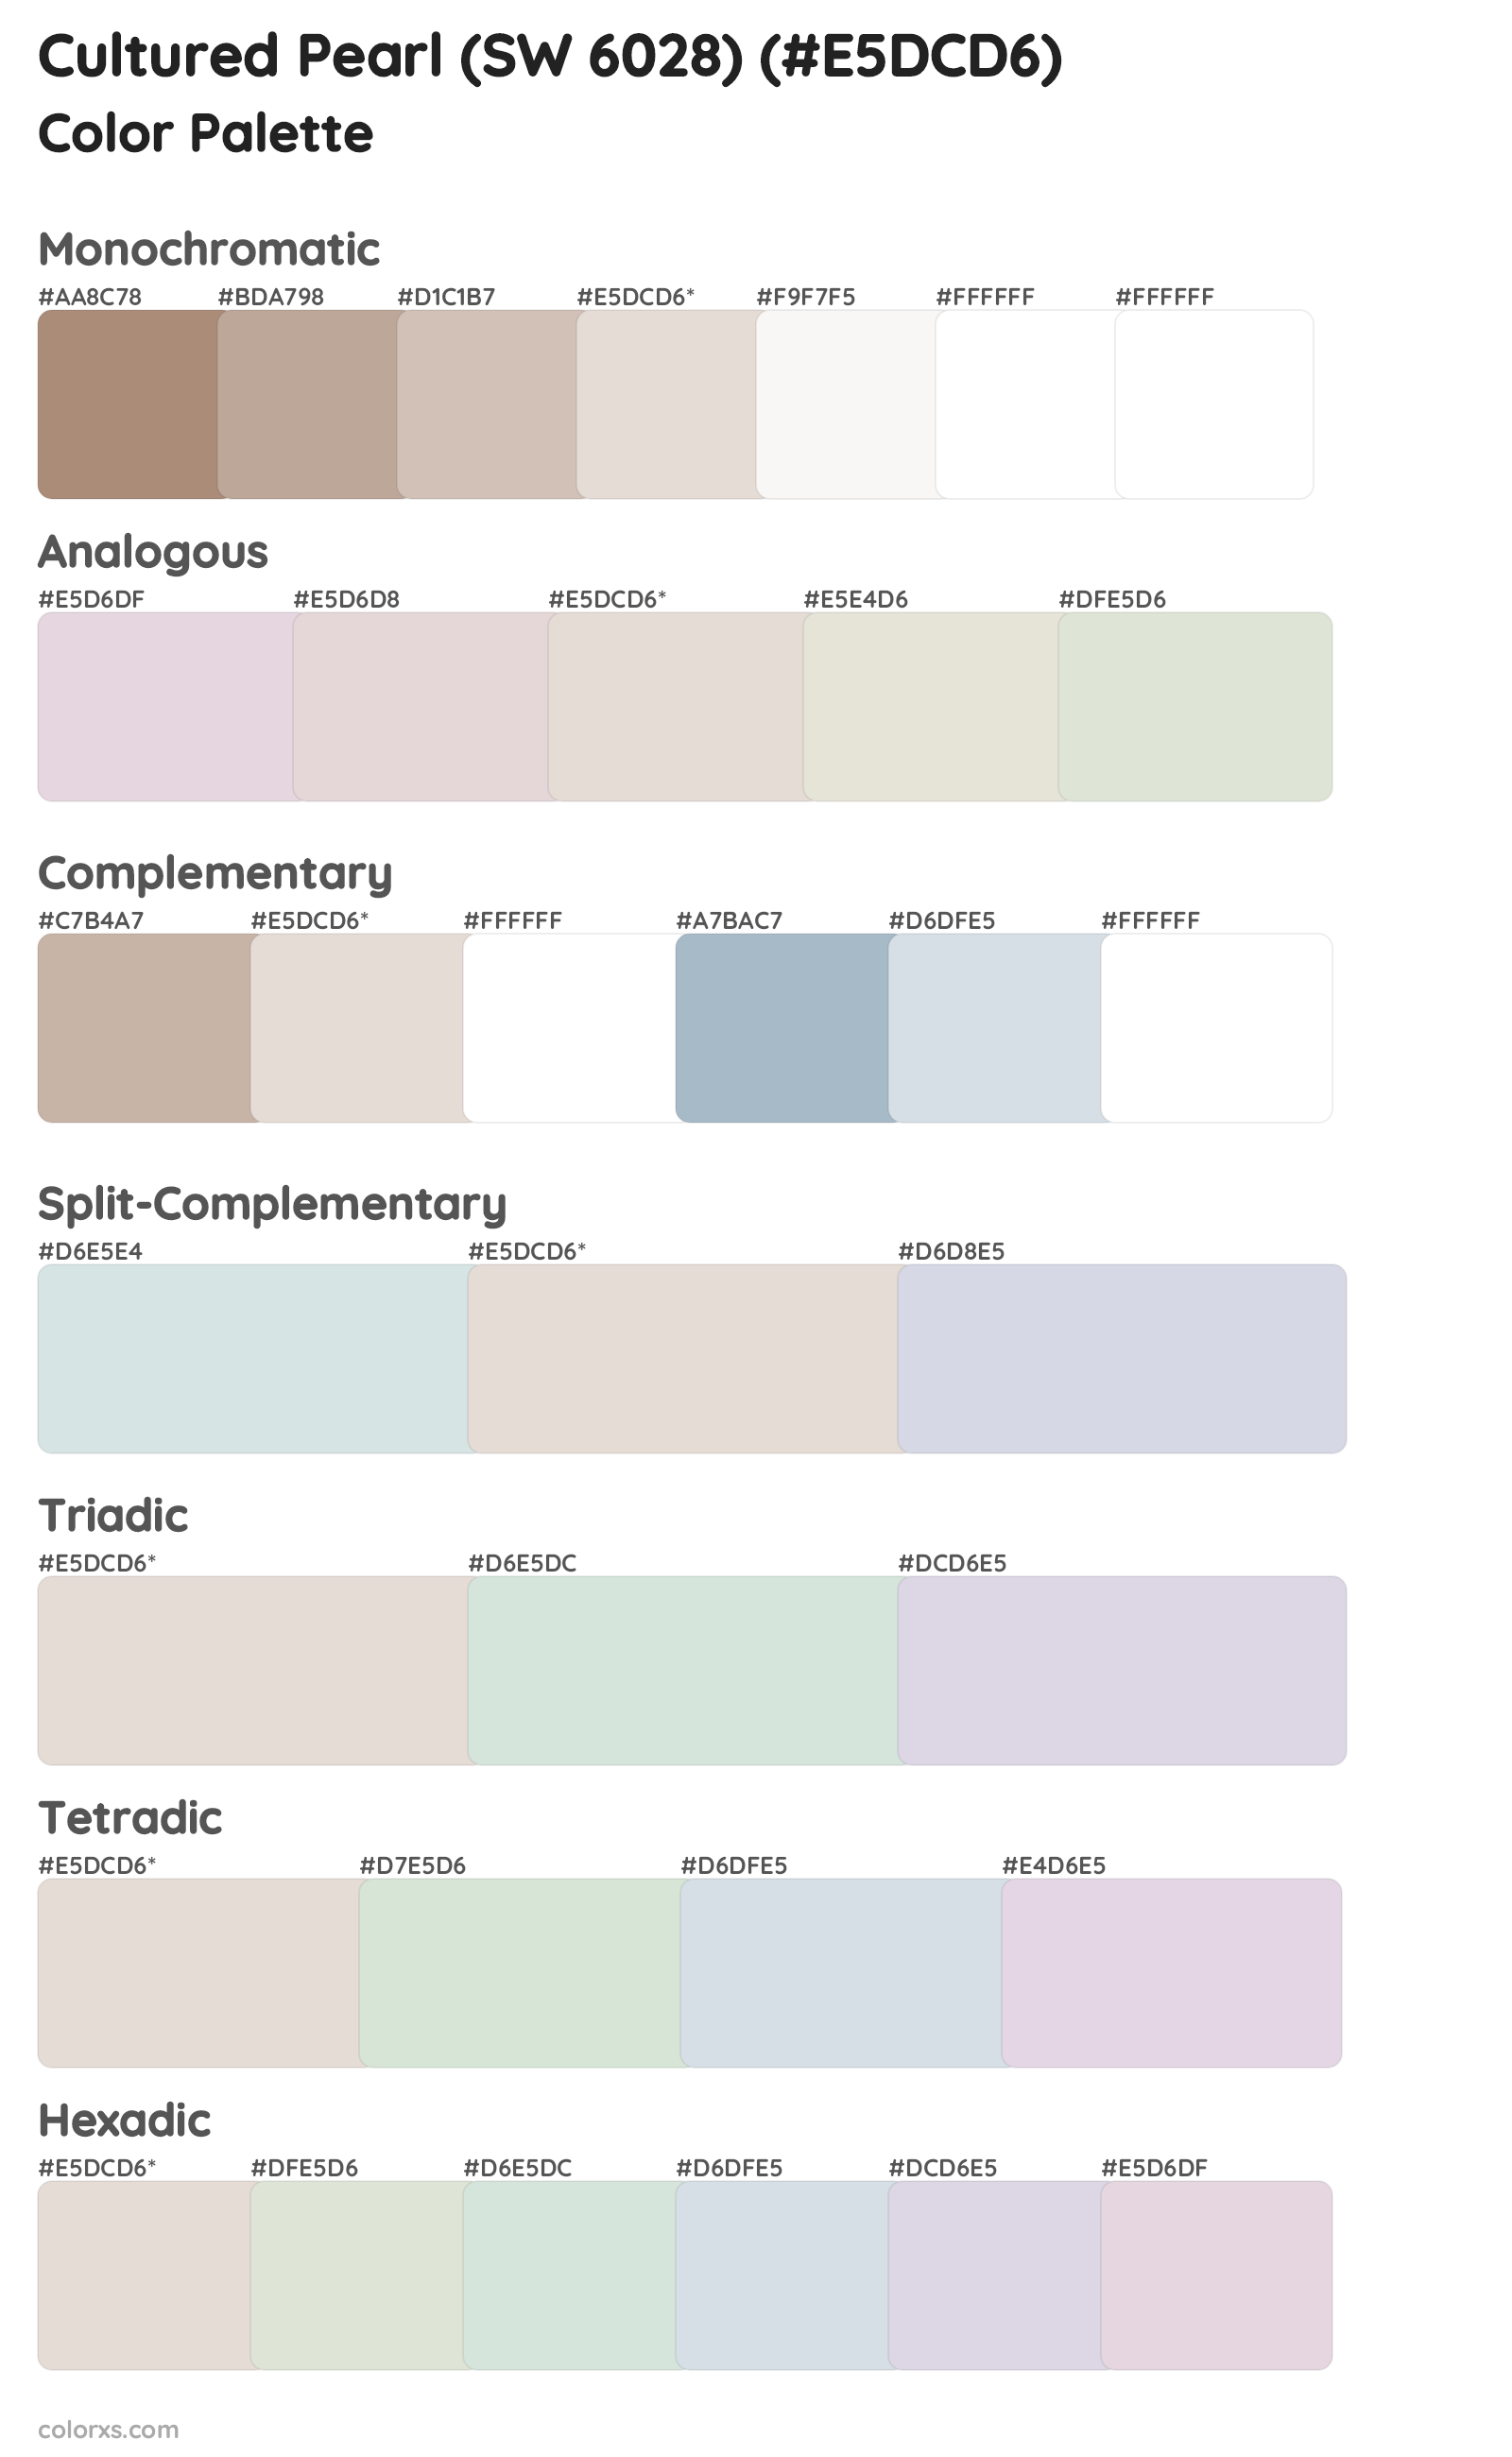 Cultured Pearl (SW 6028) Color Scheme Palettes